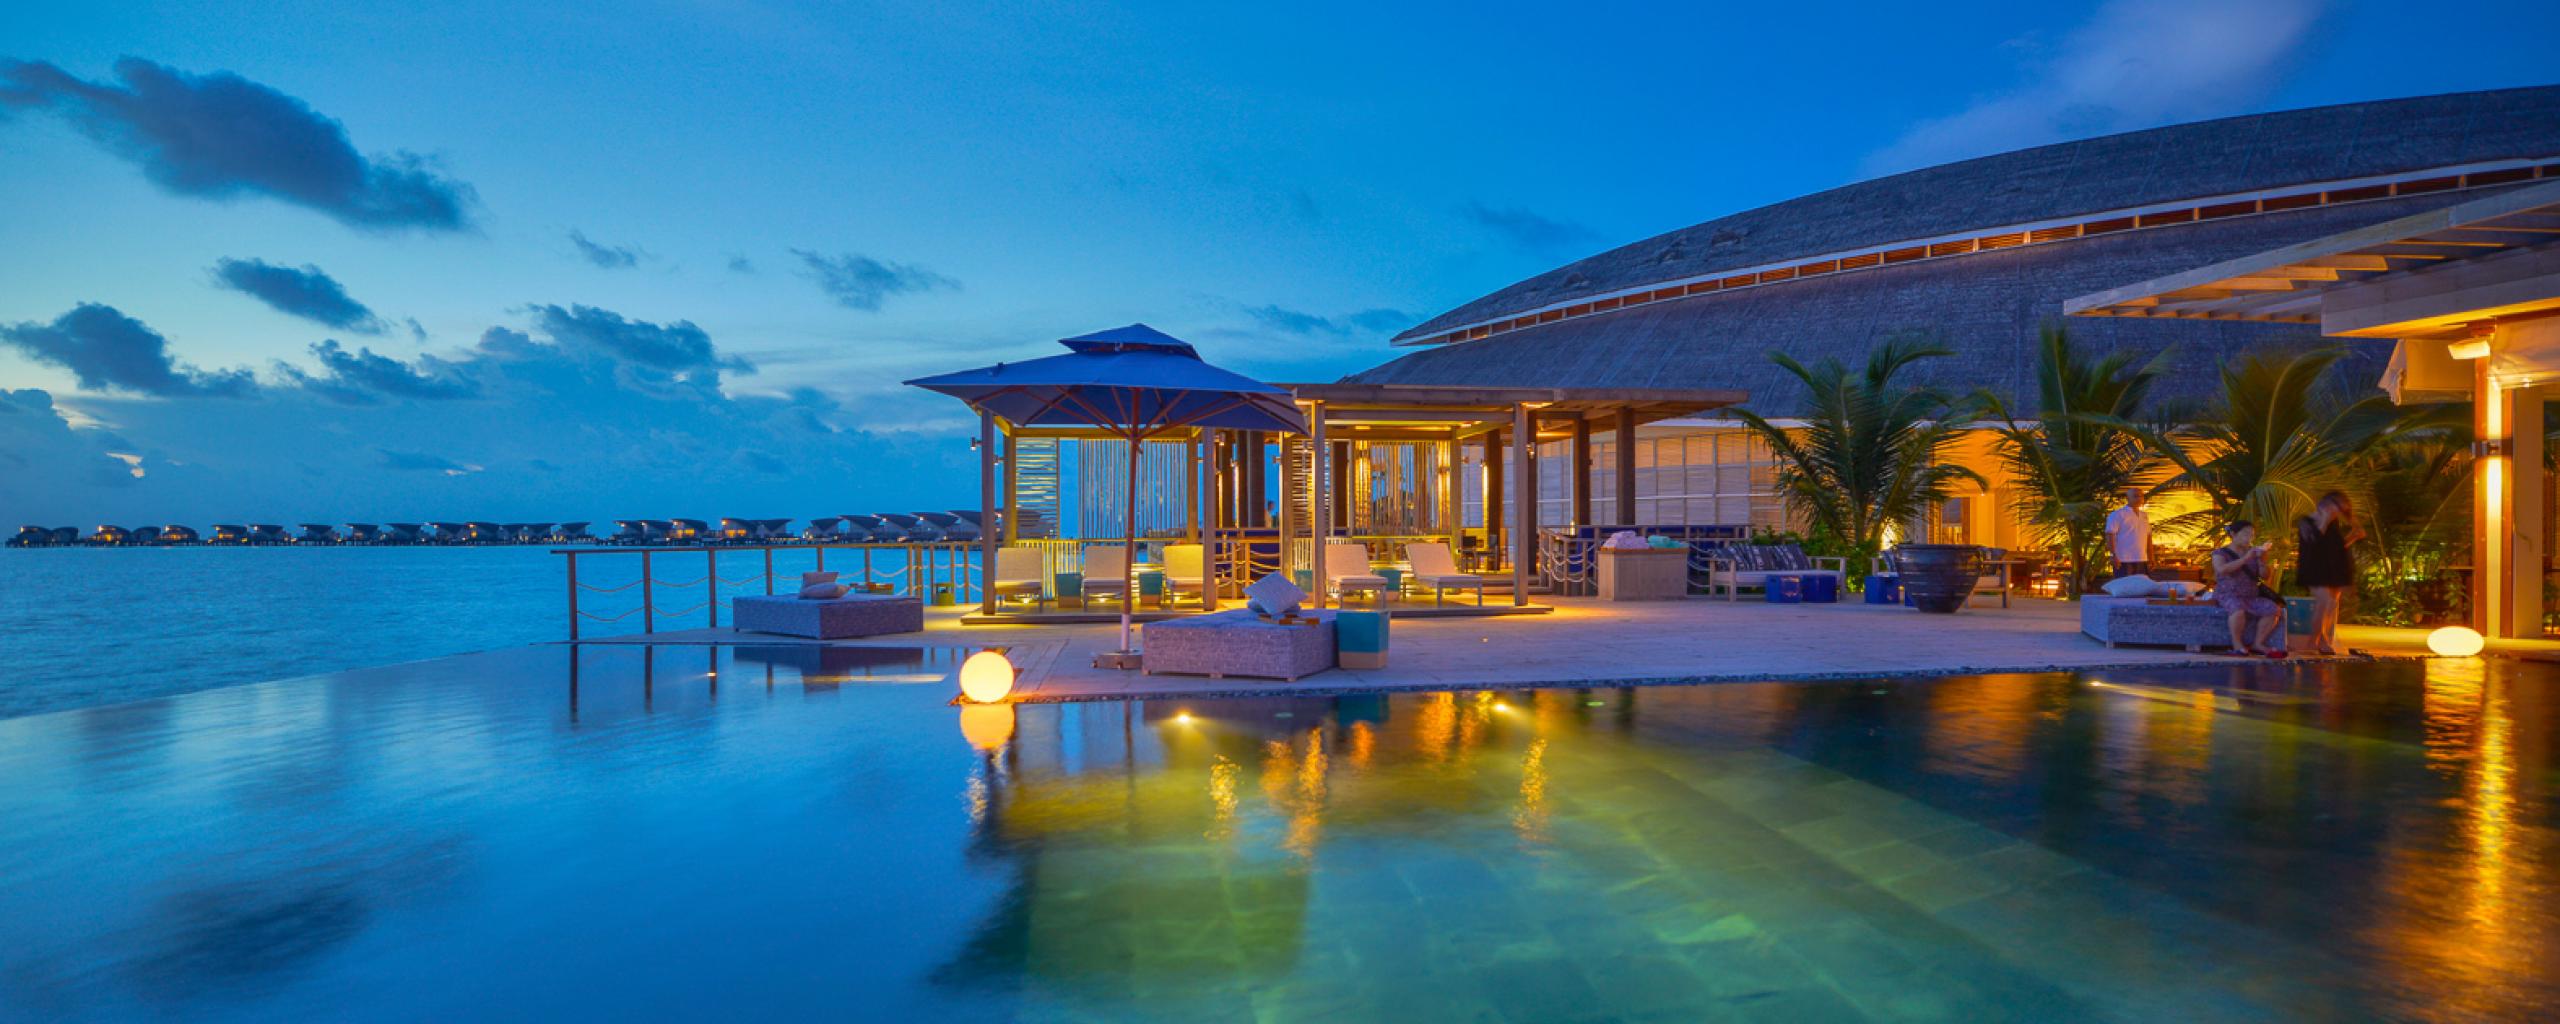 Viceroy Resort - Malediven